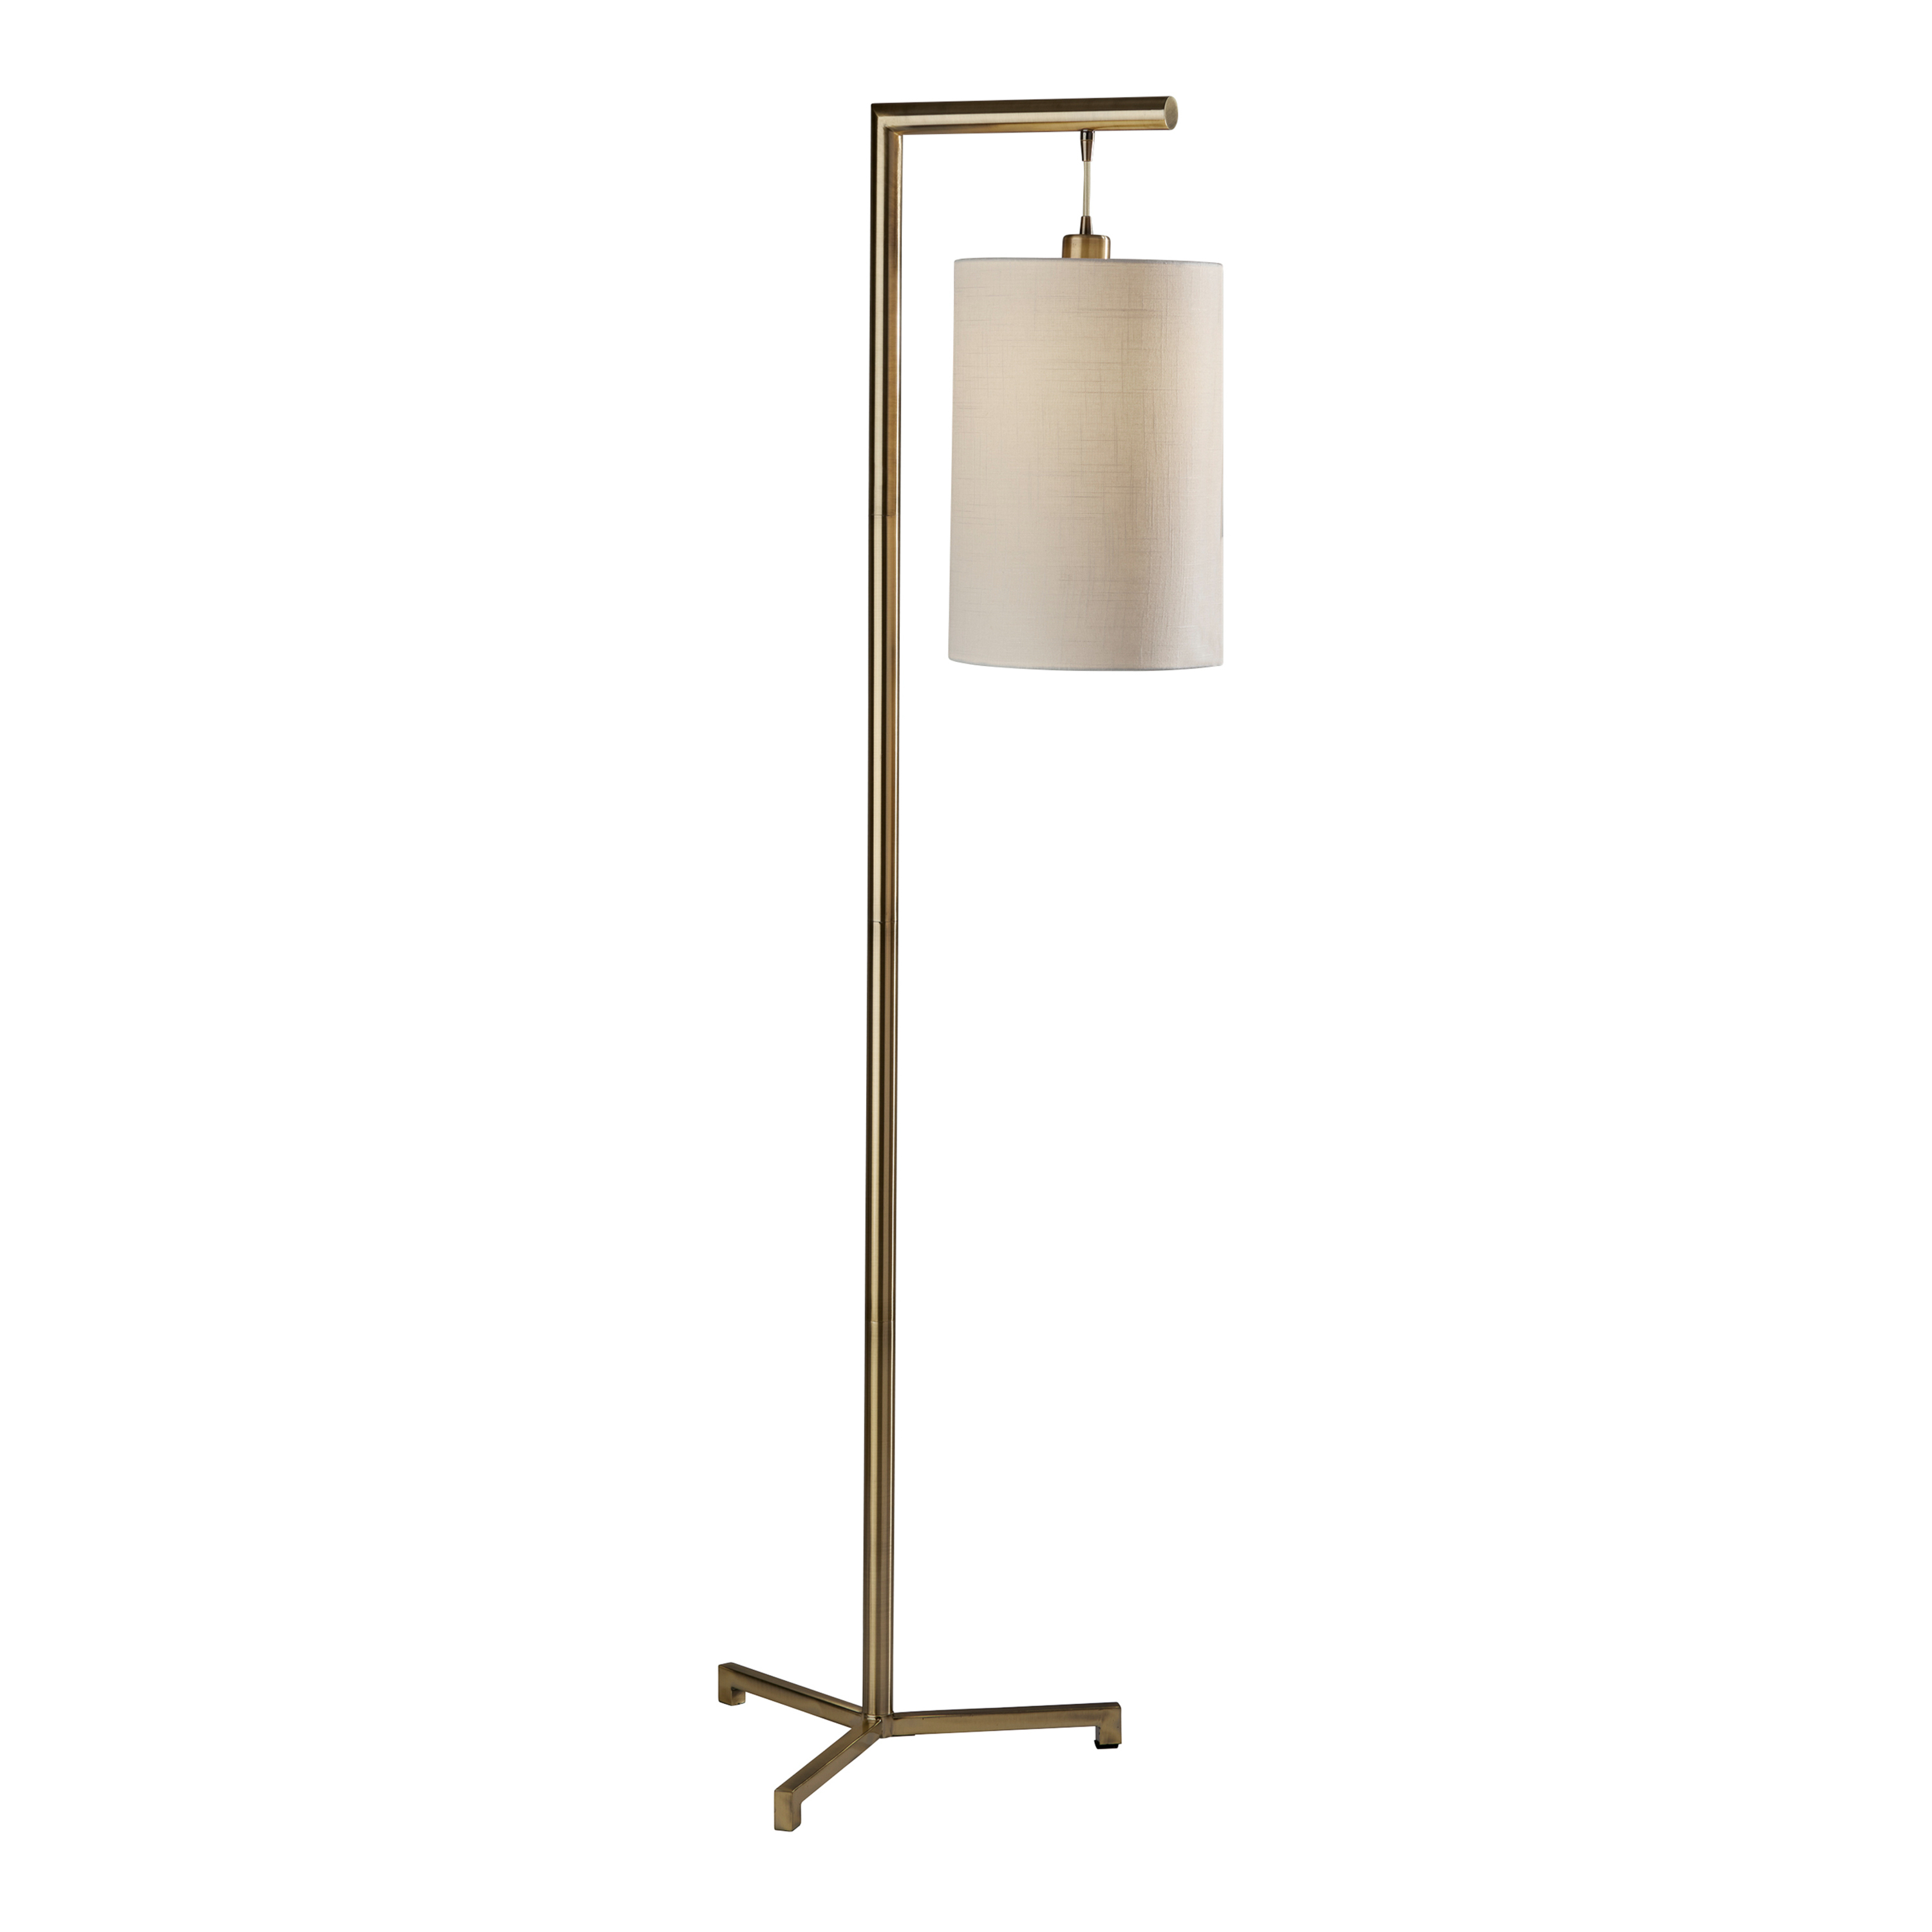 Lamp Market Brass Shade Antique - Yves Floor World Hanging